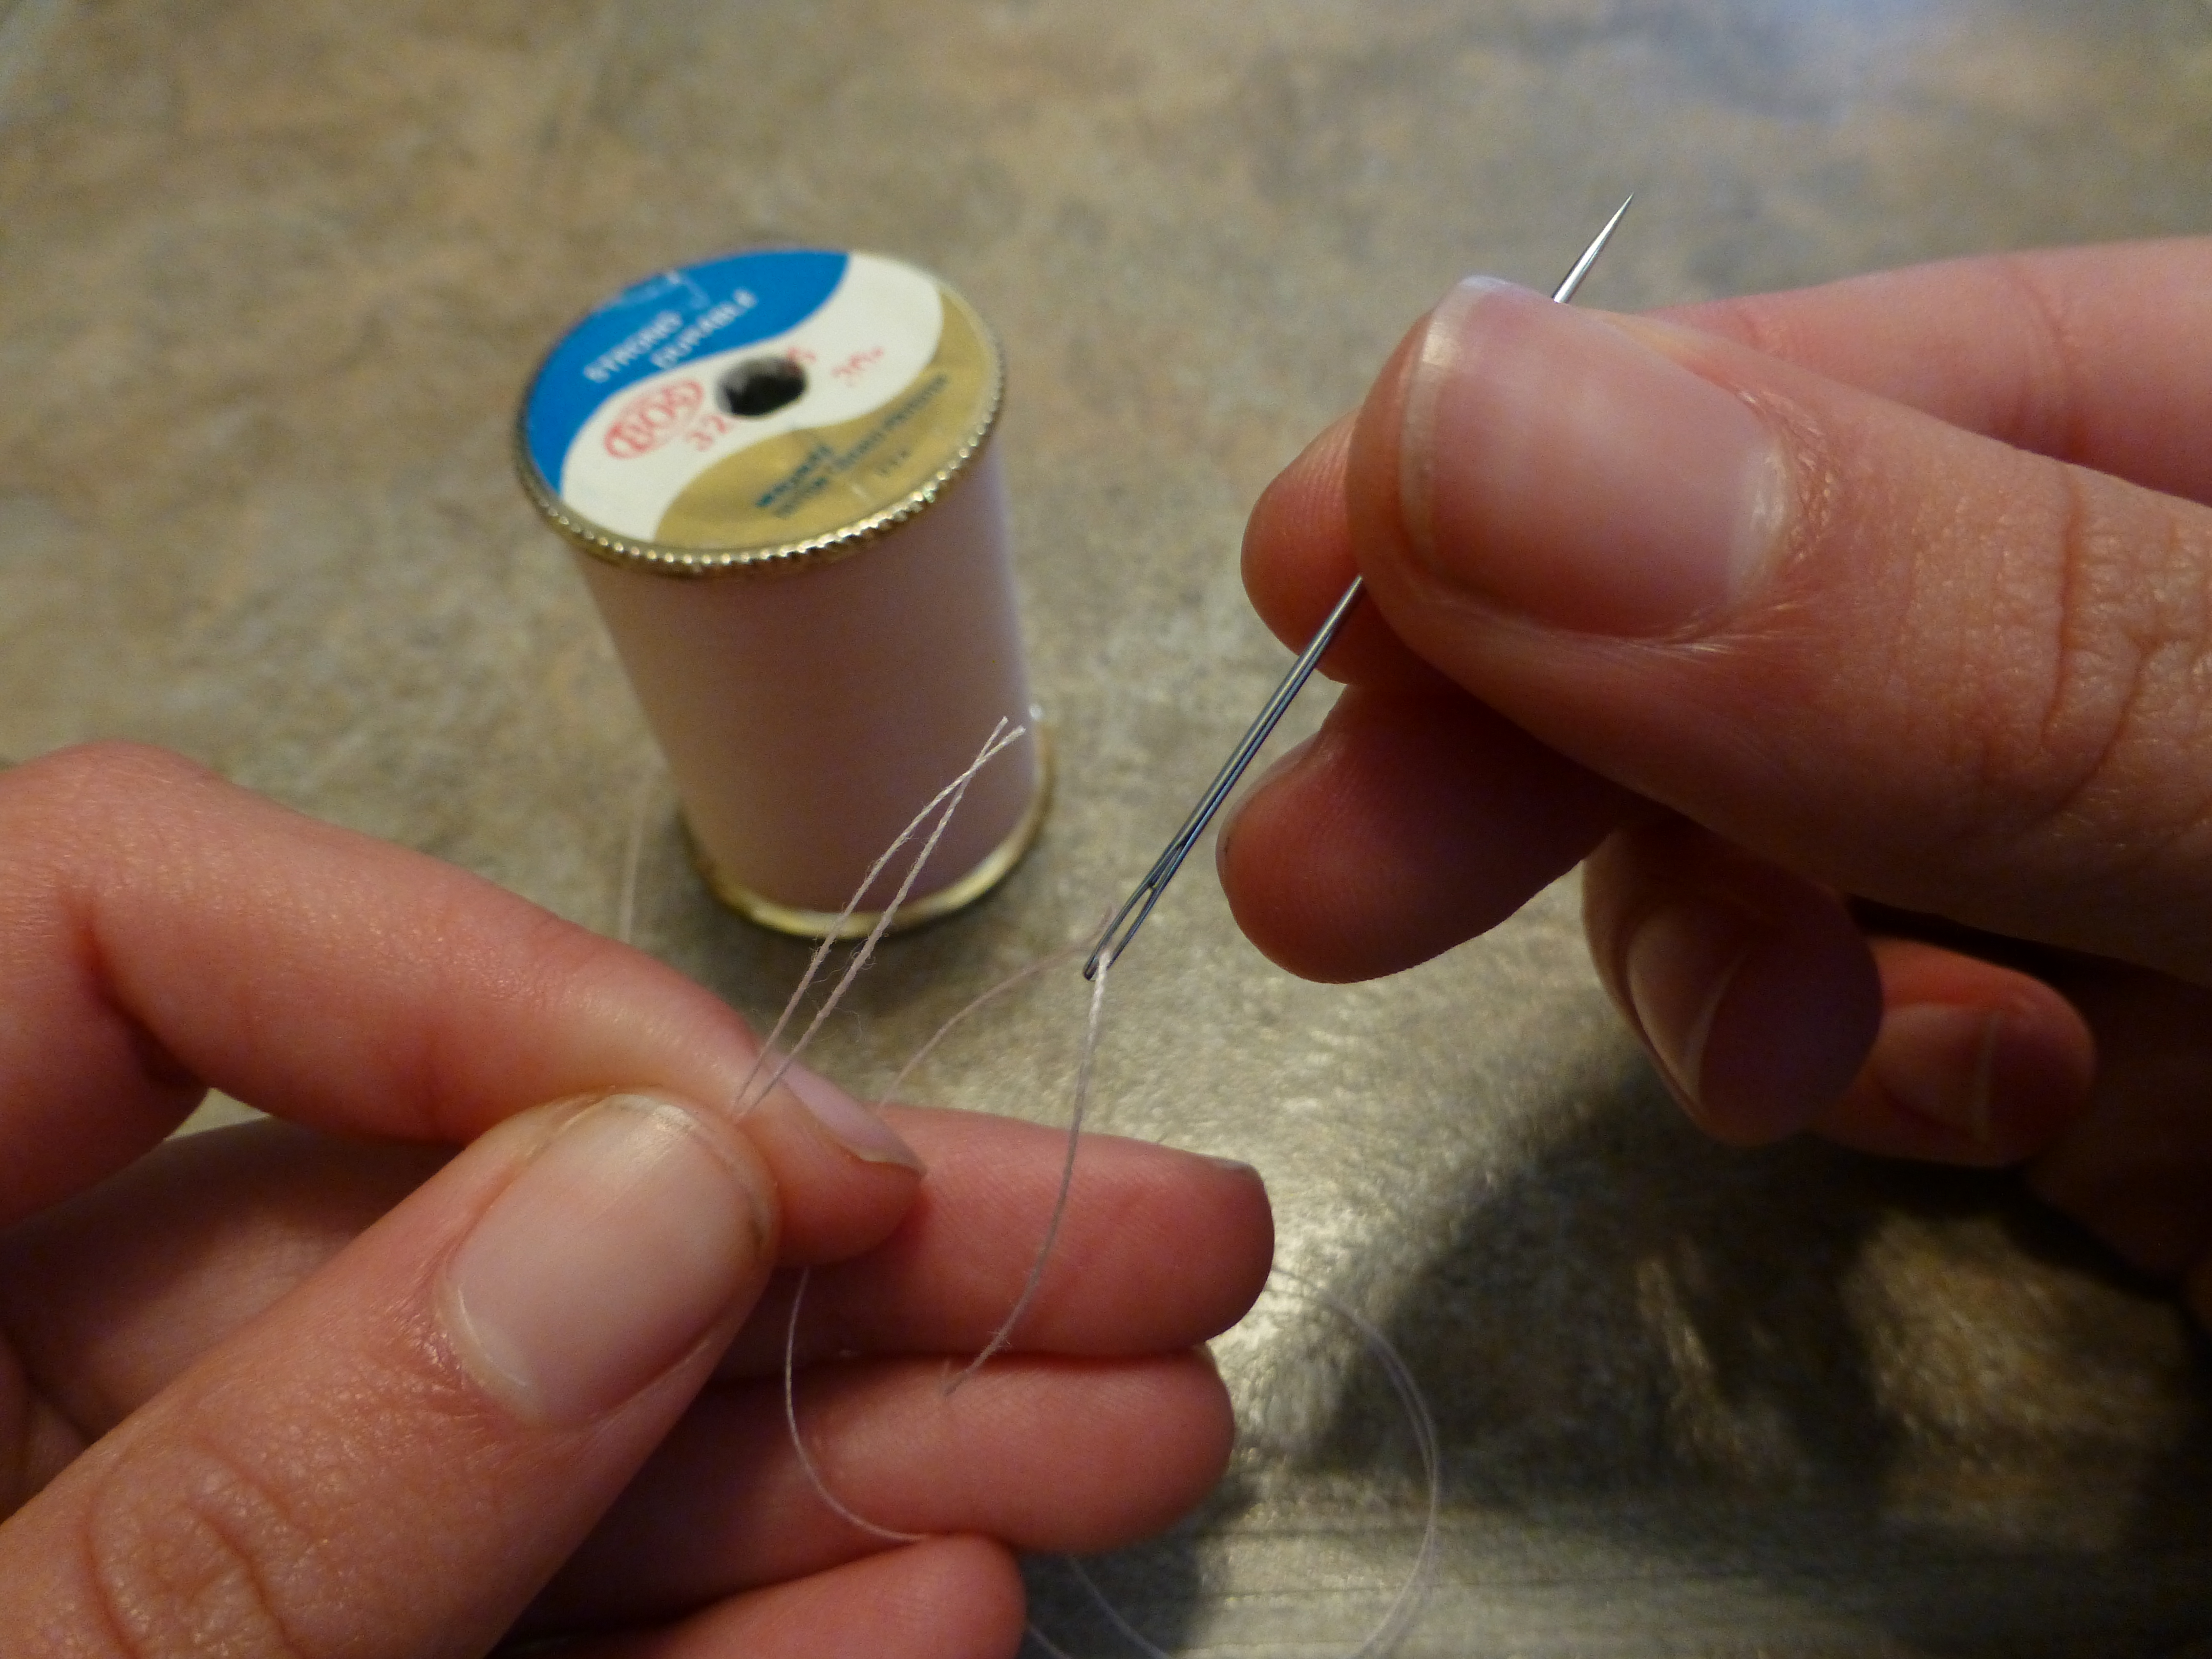 Double threading a needle